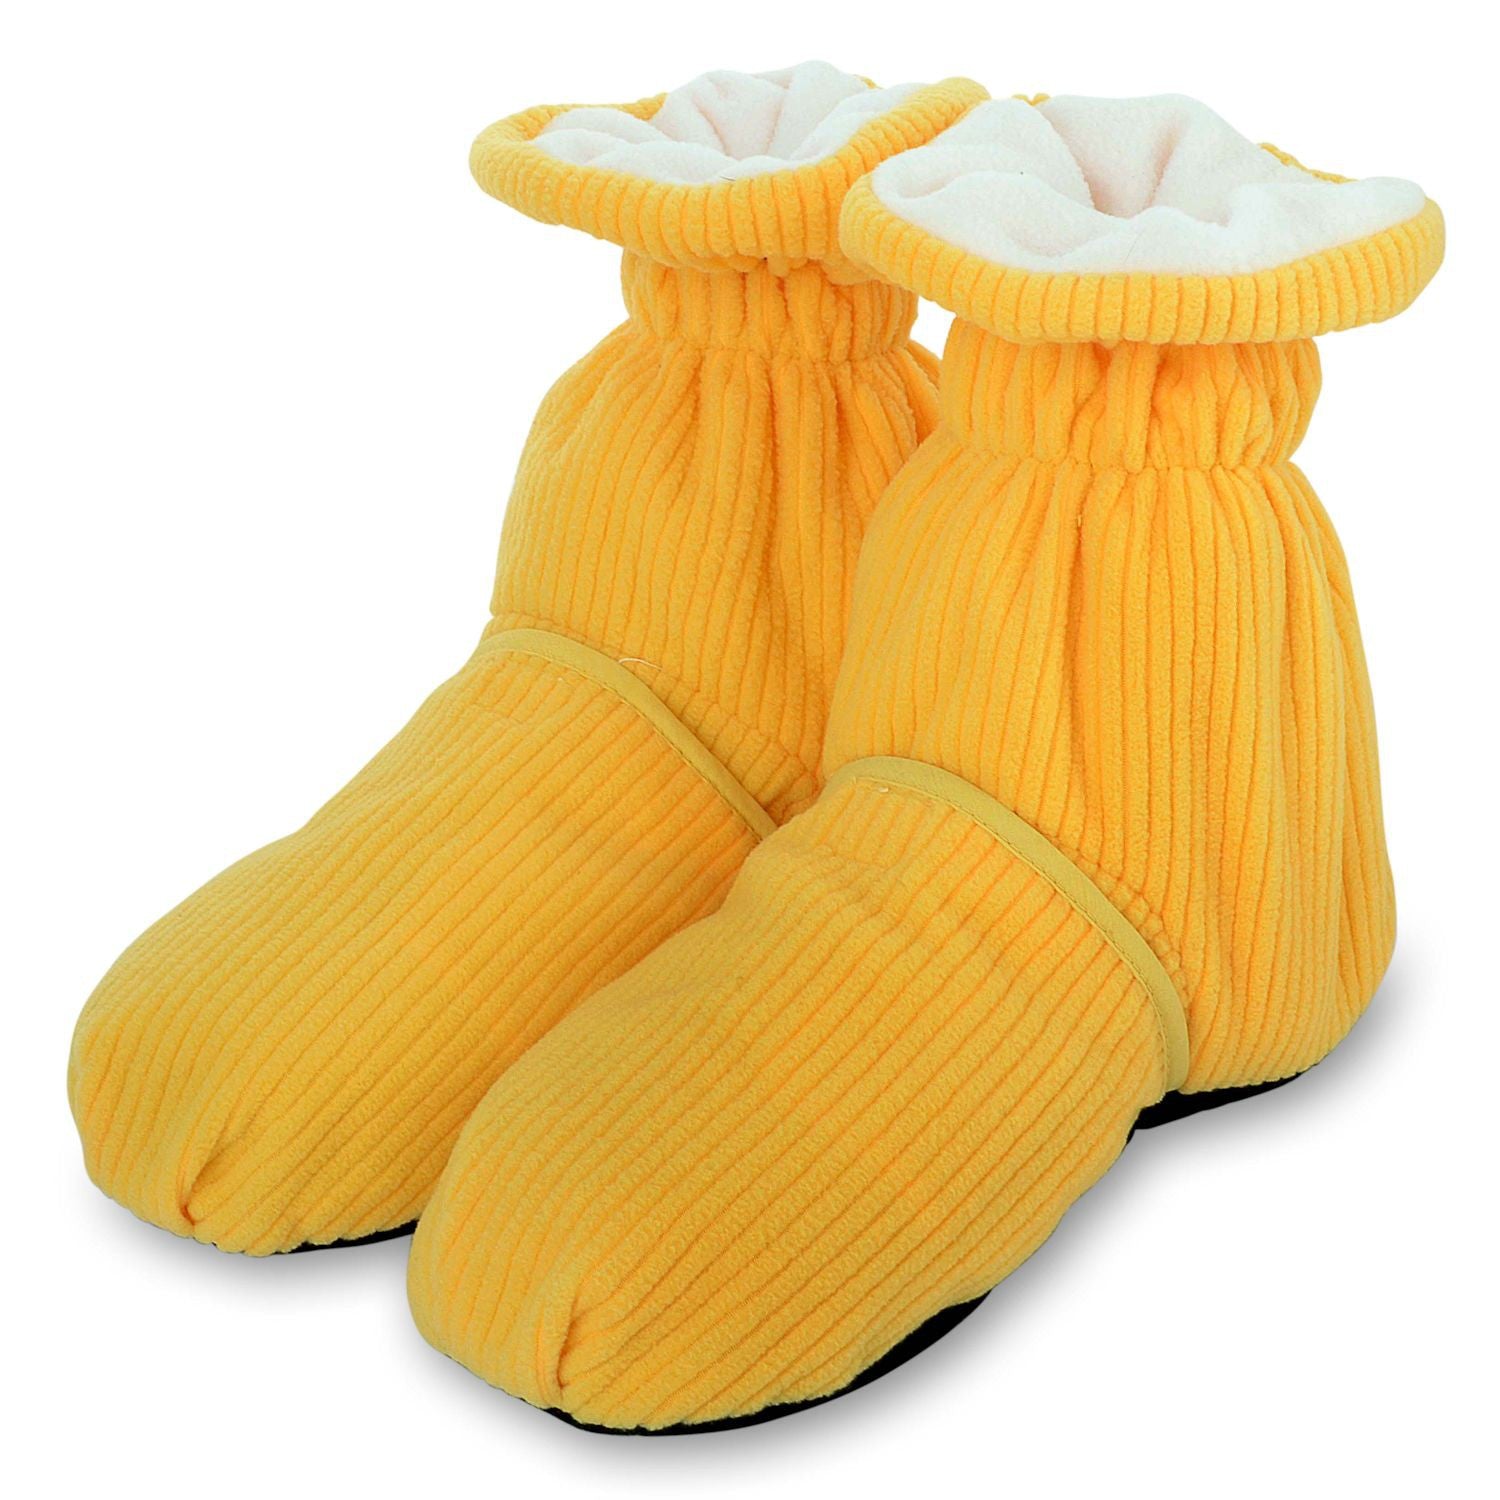 Zhu-Zhu Cozy Toes Microwavable Feet Warmers - Yellow Slipper Boots